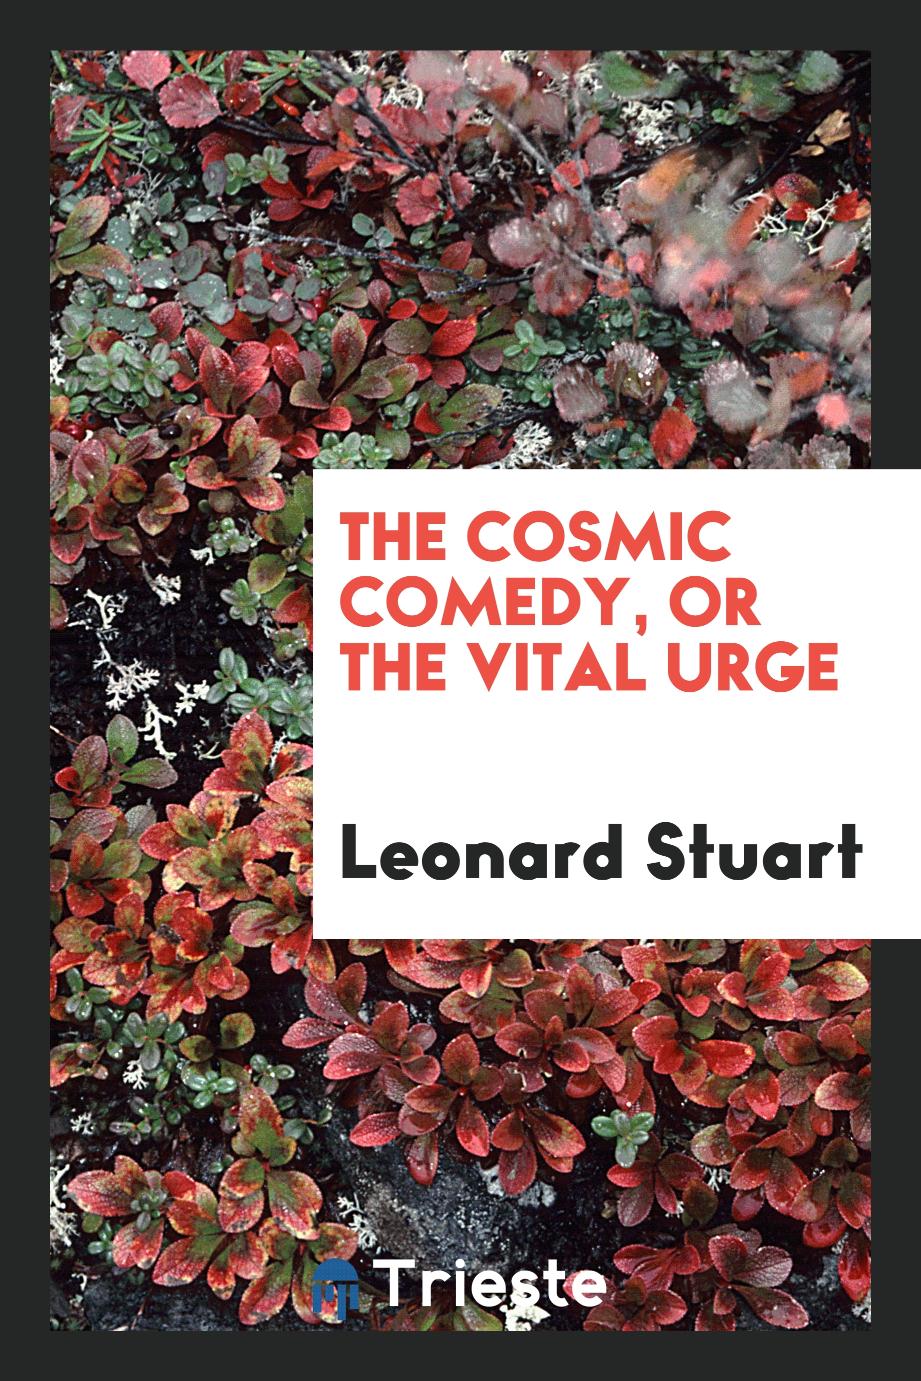 The Cosmic Comedy, or the Vital Urge